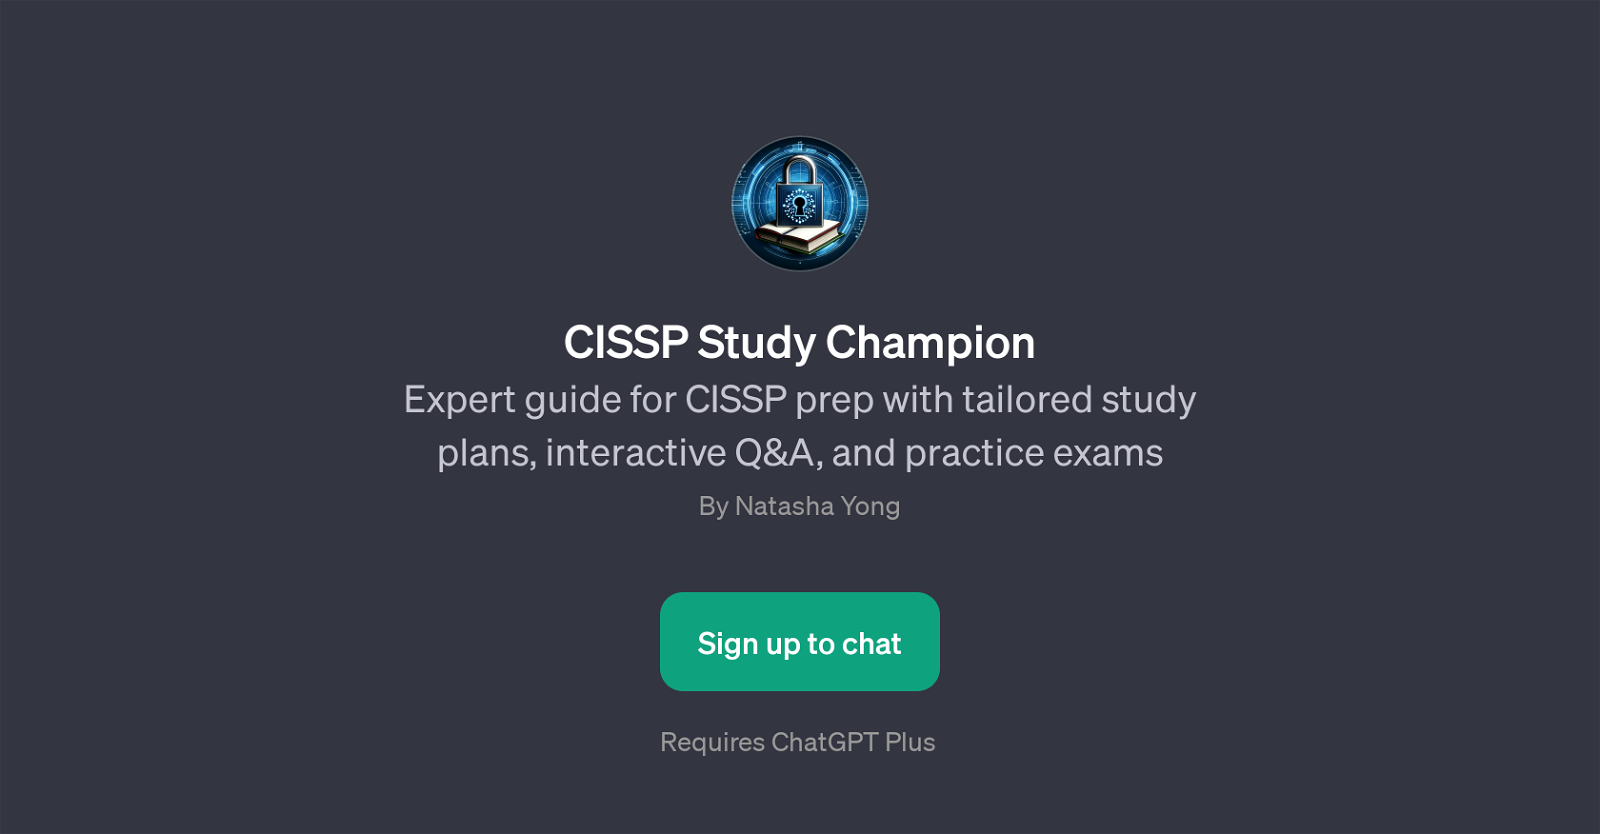 CISSP Study Champion website